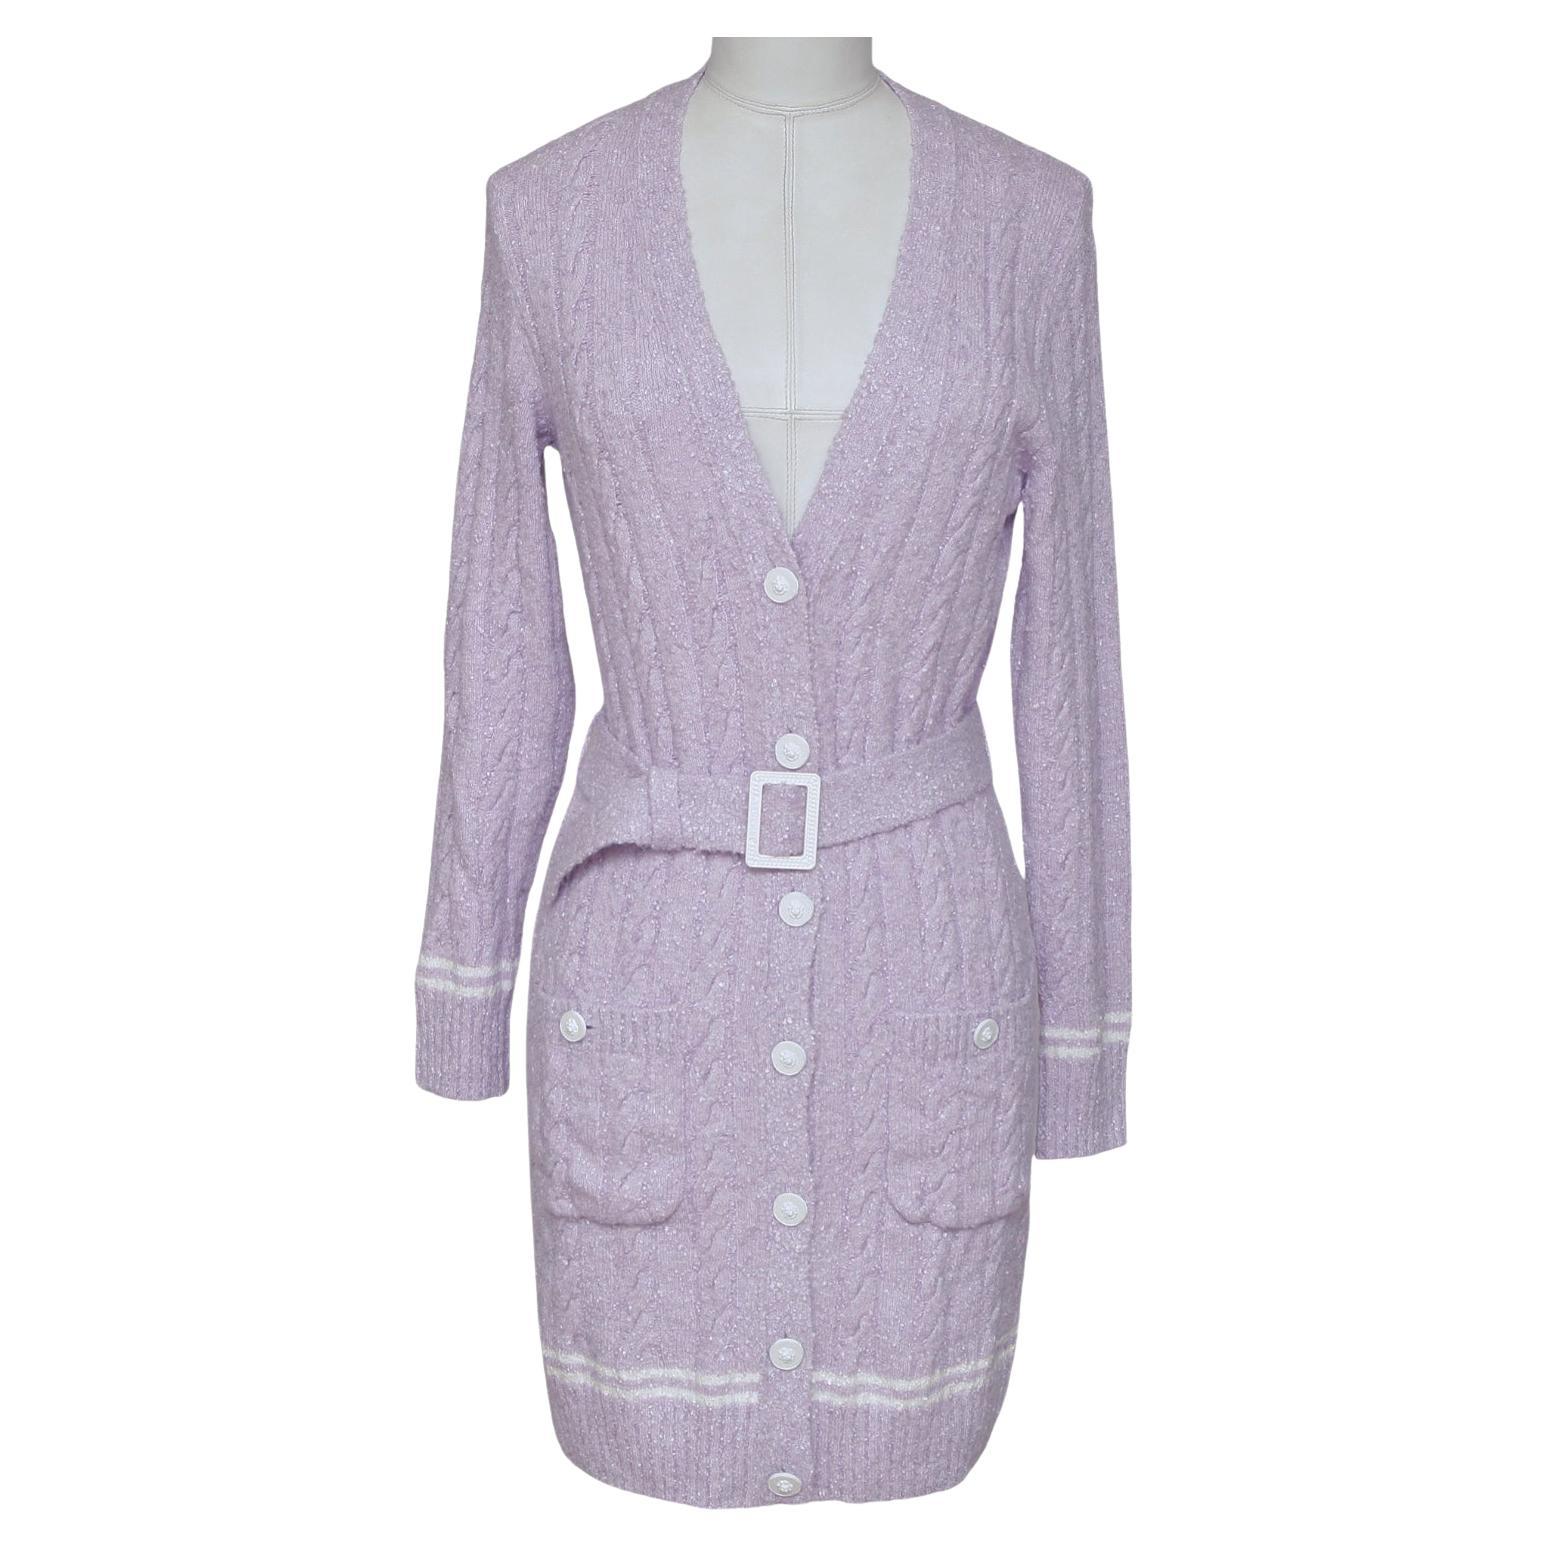 CHANEL Cardigan Sweater Knit Top Lavender White Long Sleeve Belt V-Neck 34 2022 For Sale